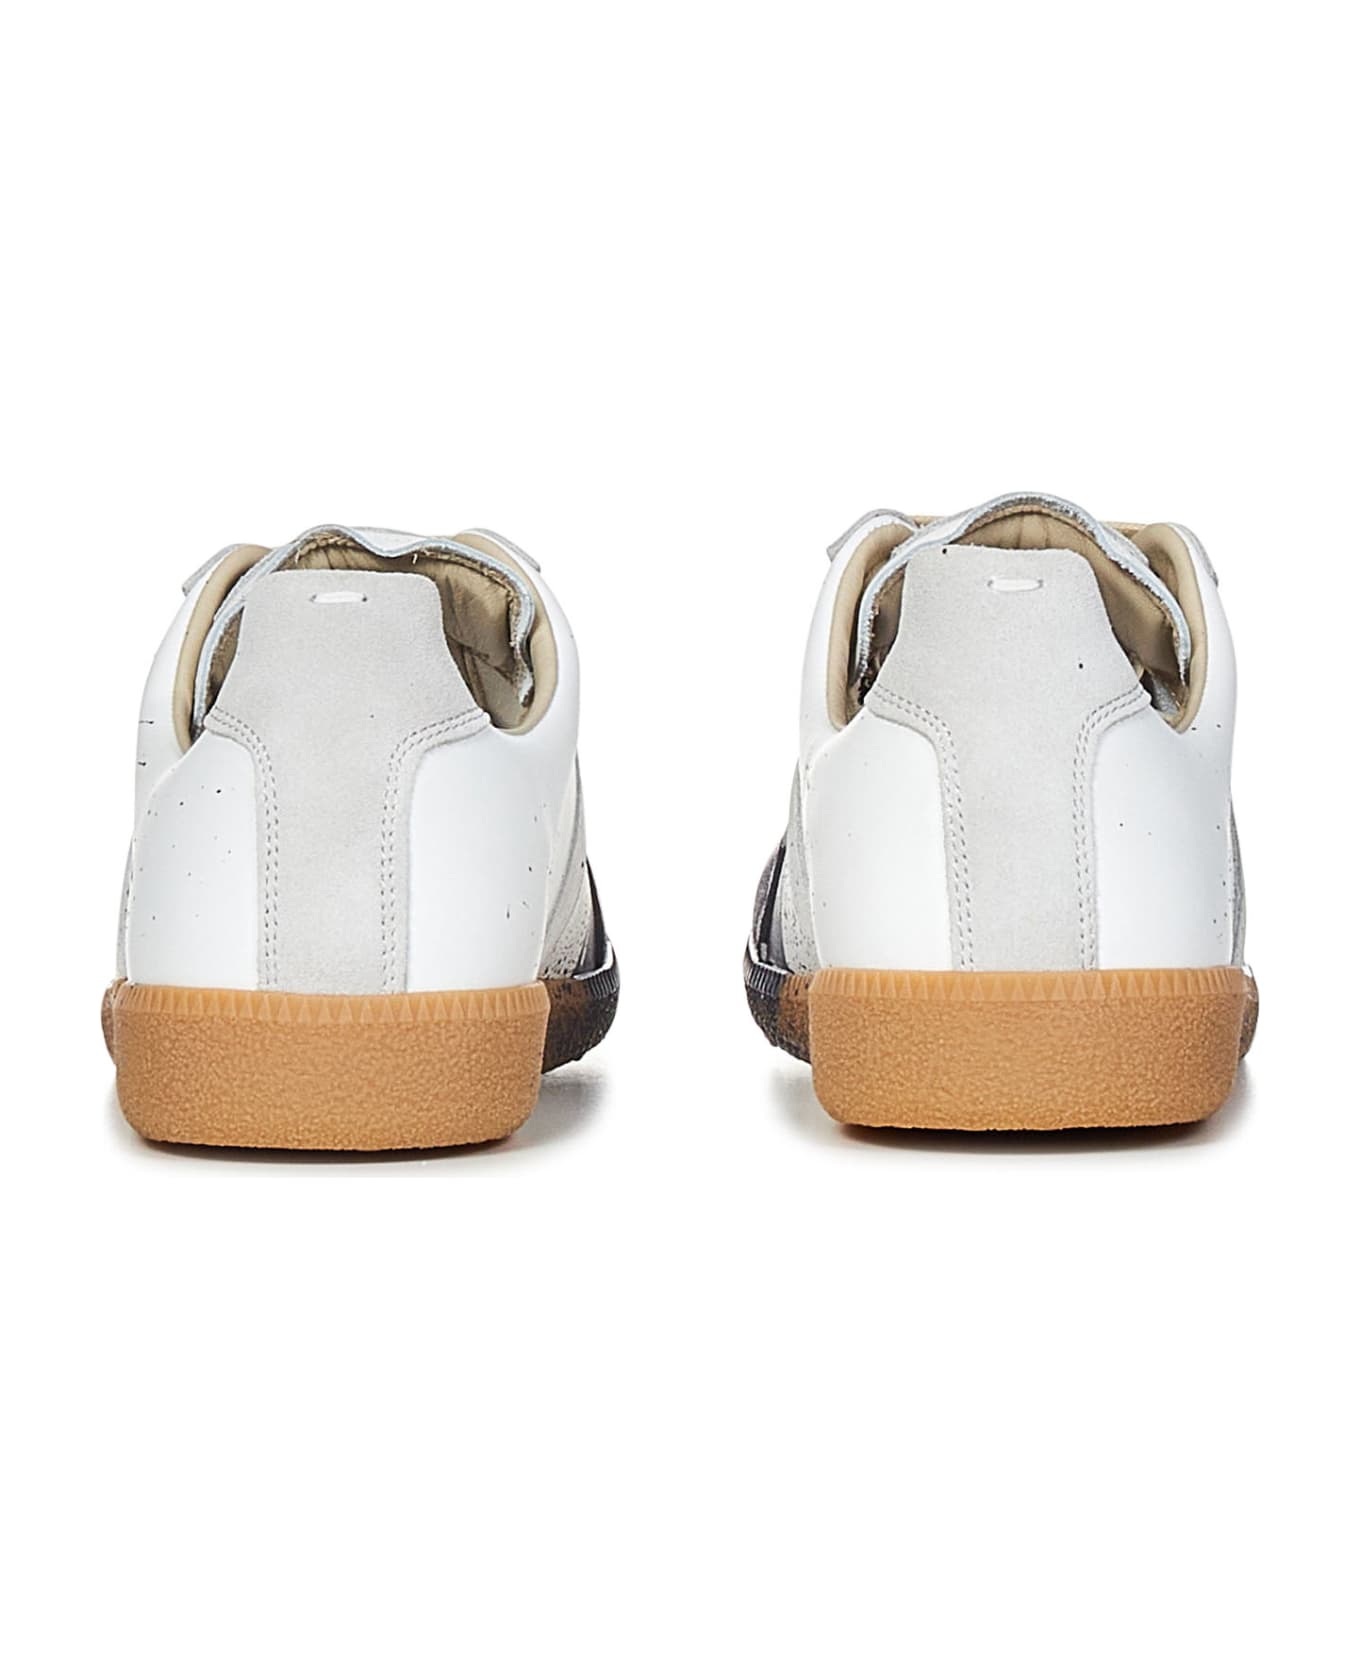 Maison Margiela Paint Replica Sneakers - White スニーカー